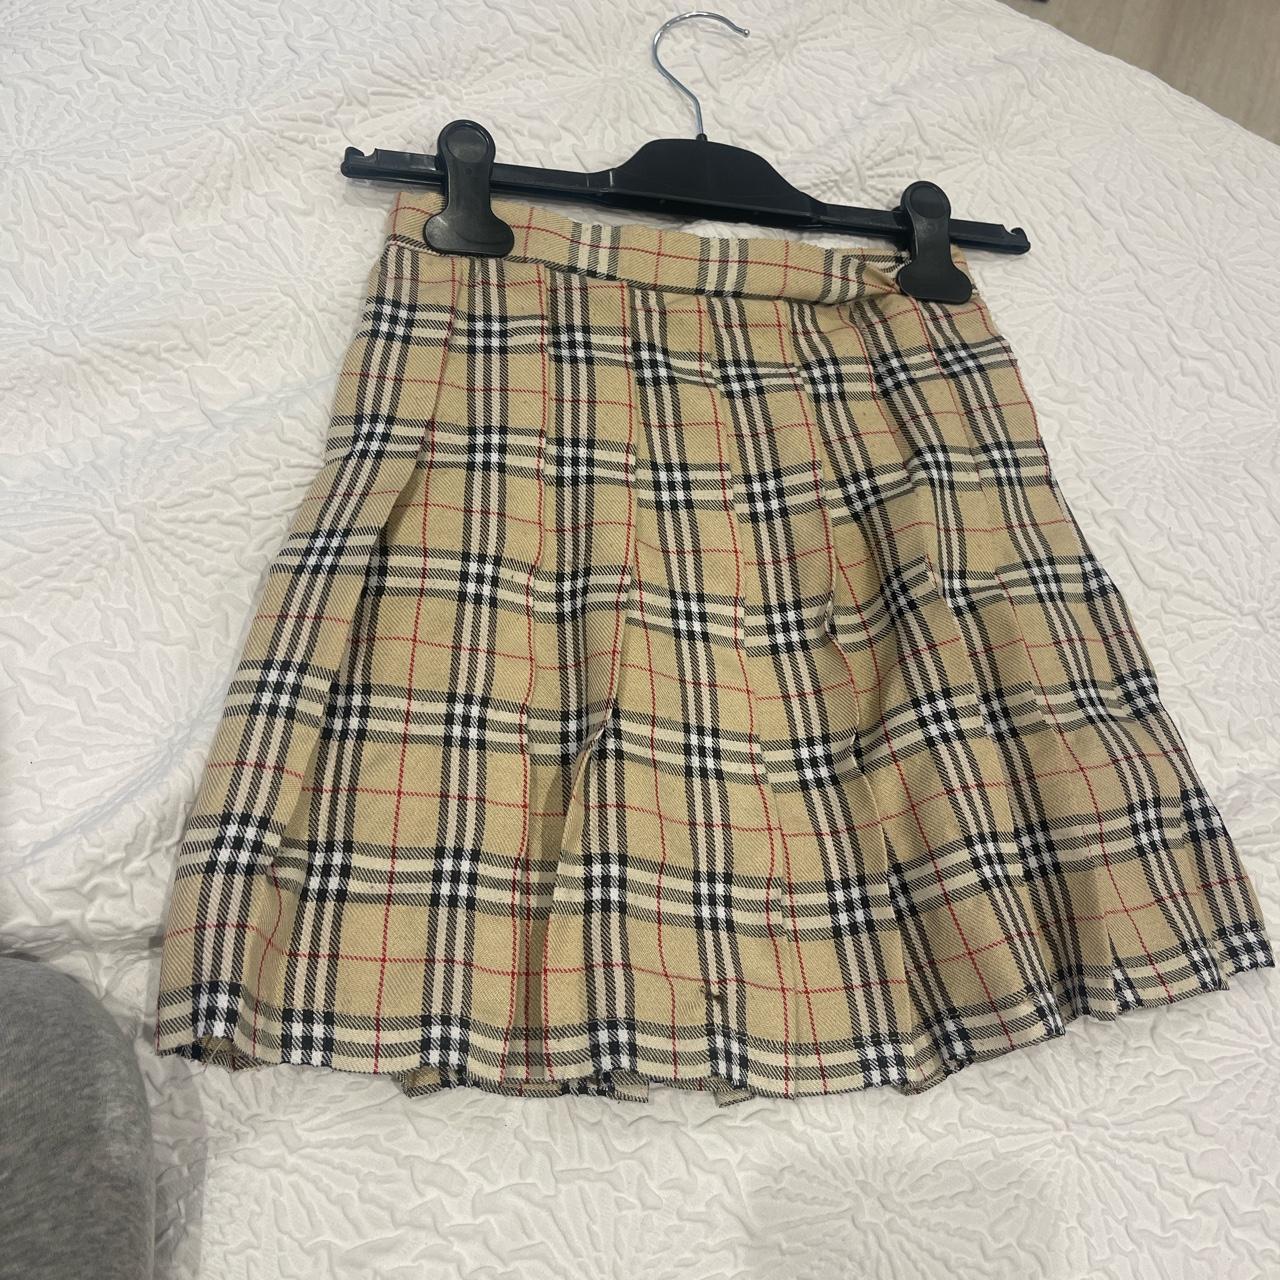 brown tennis skirt - Depop